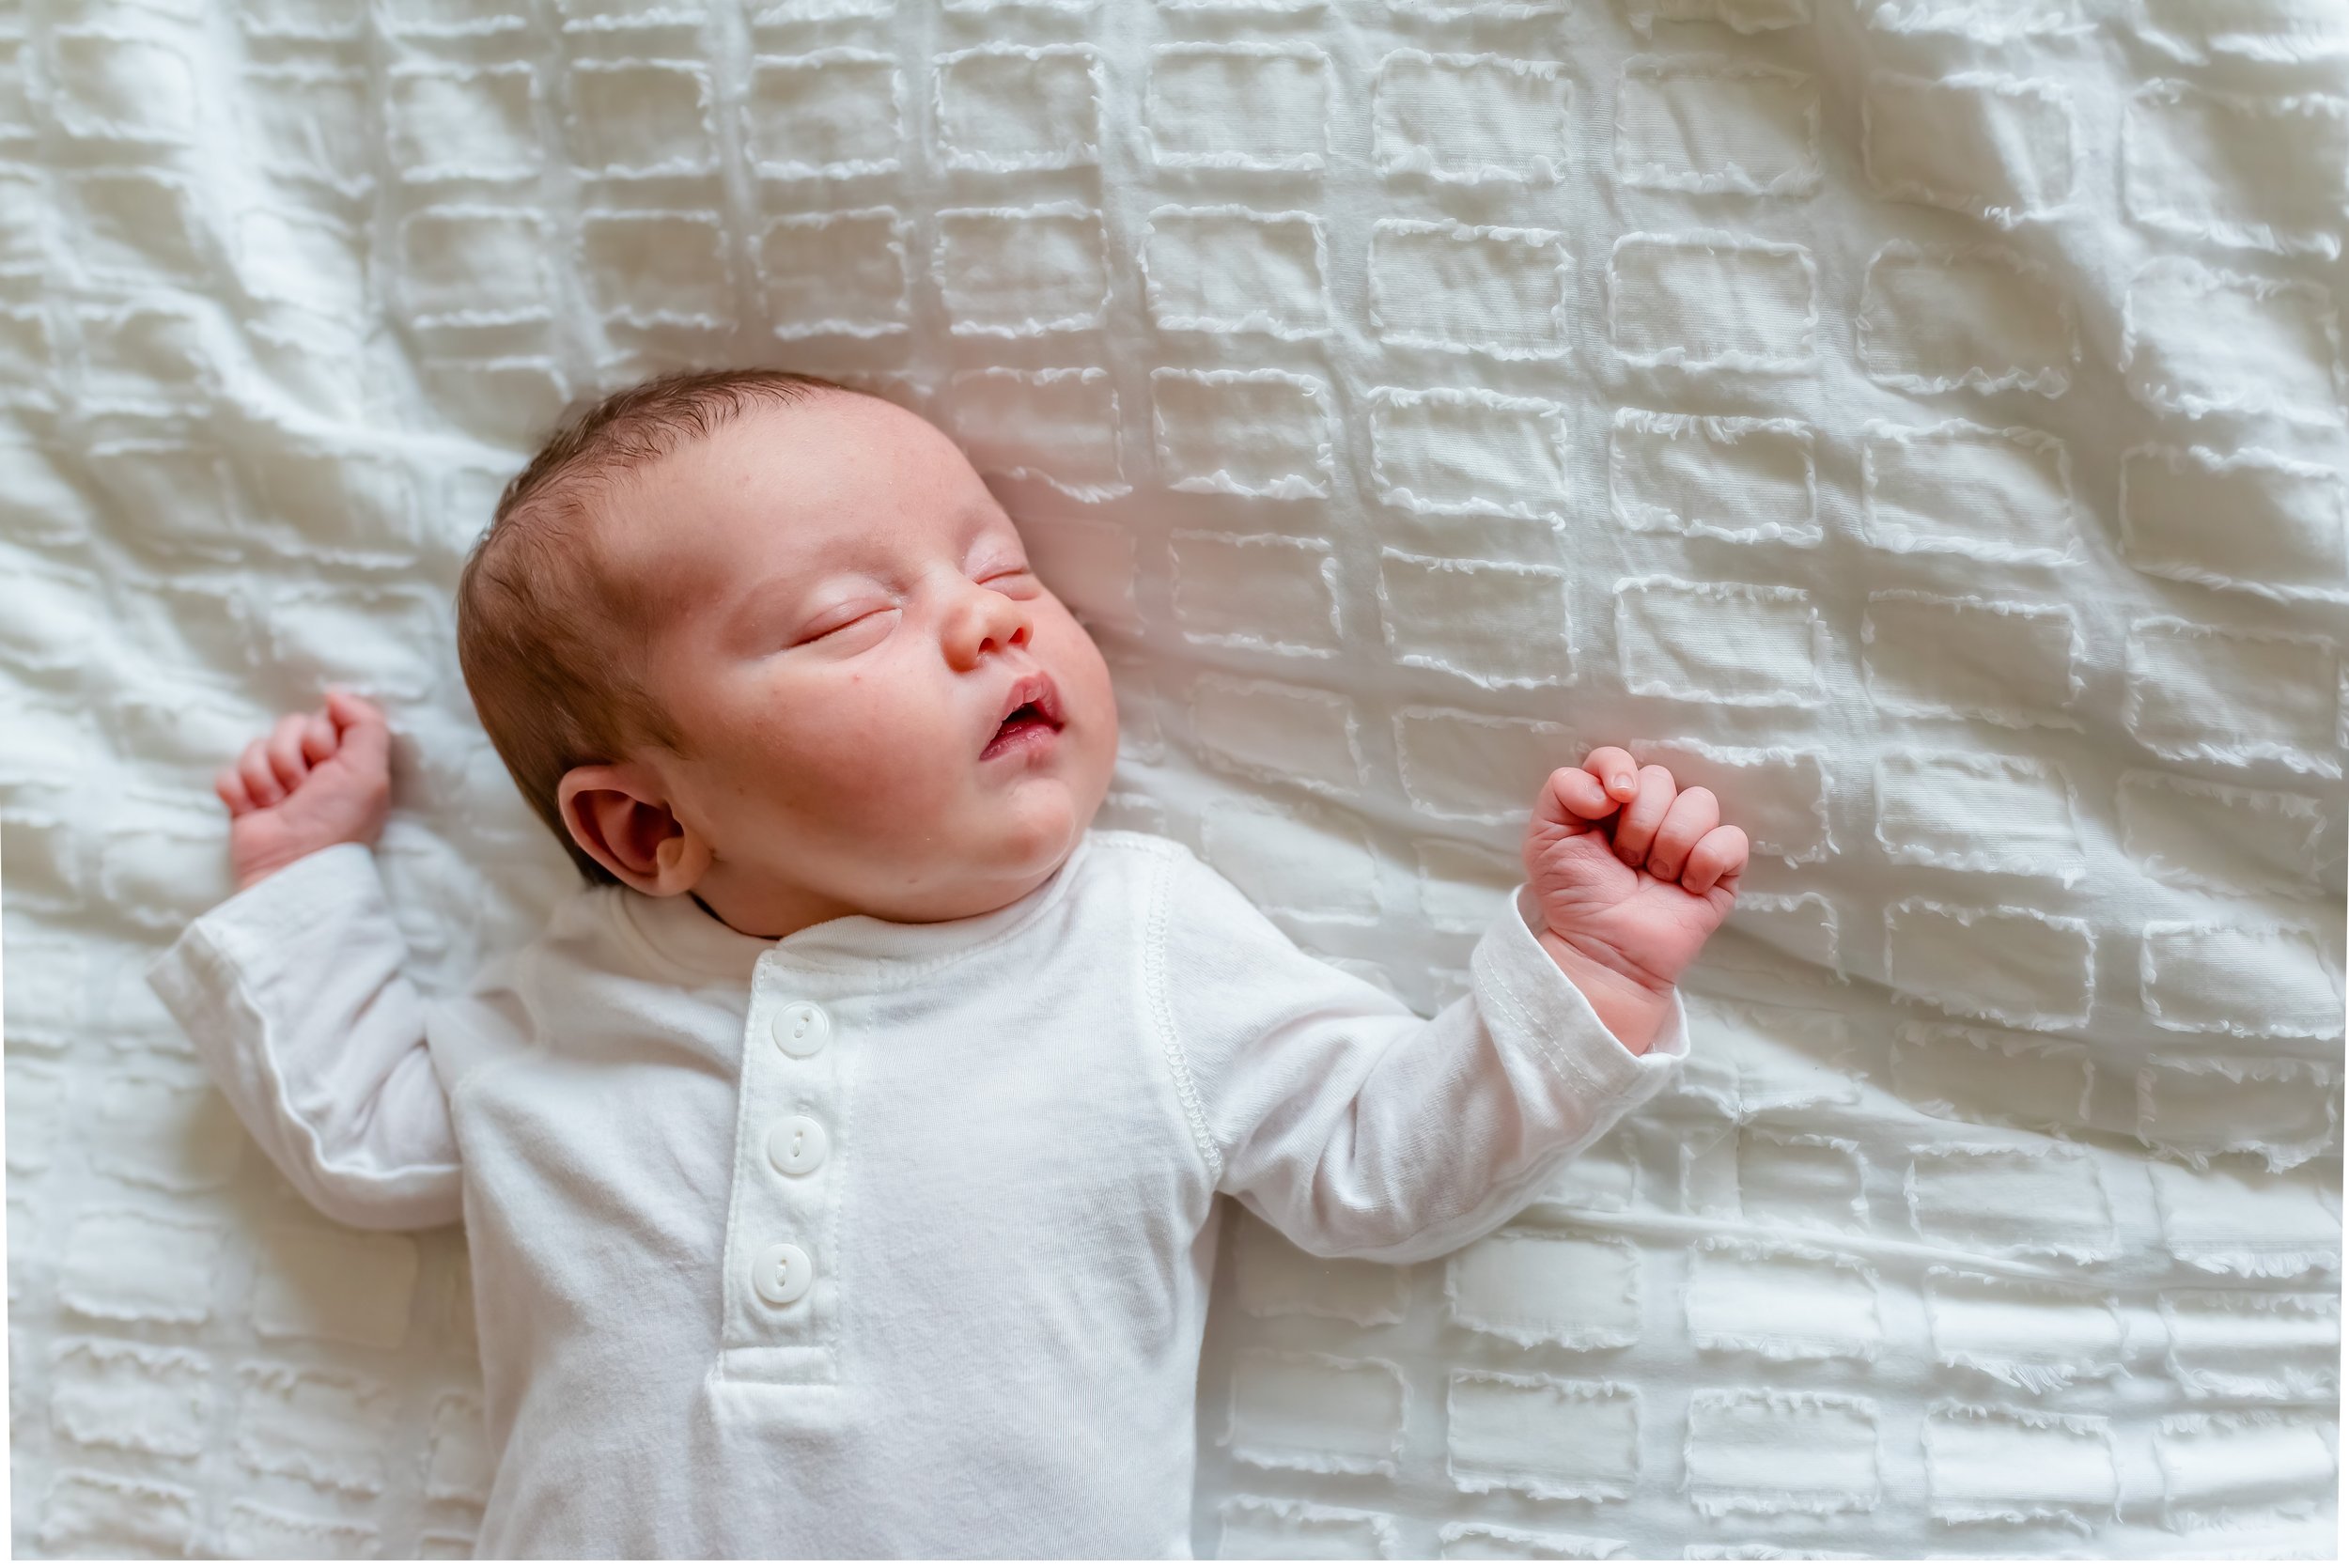 Lifestyle newborn photographer - newborn baby asleep on the bed